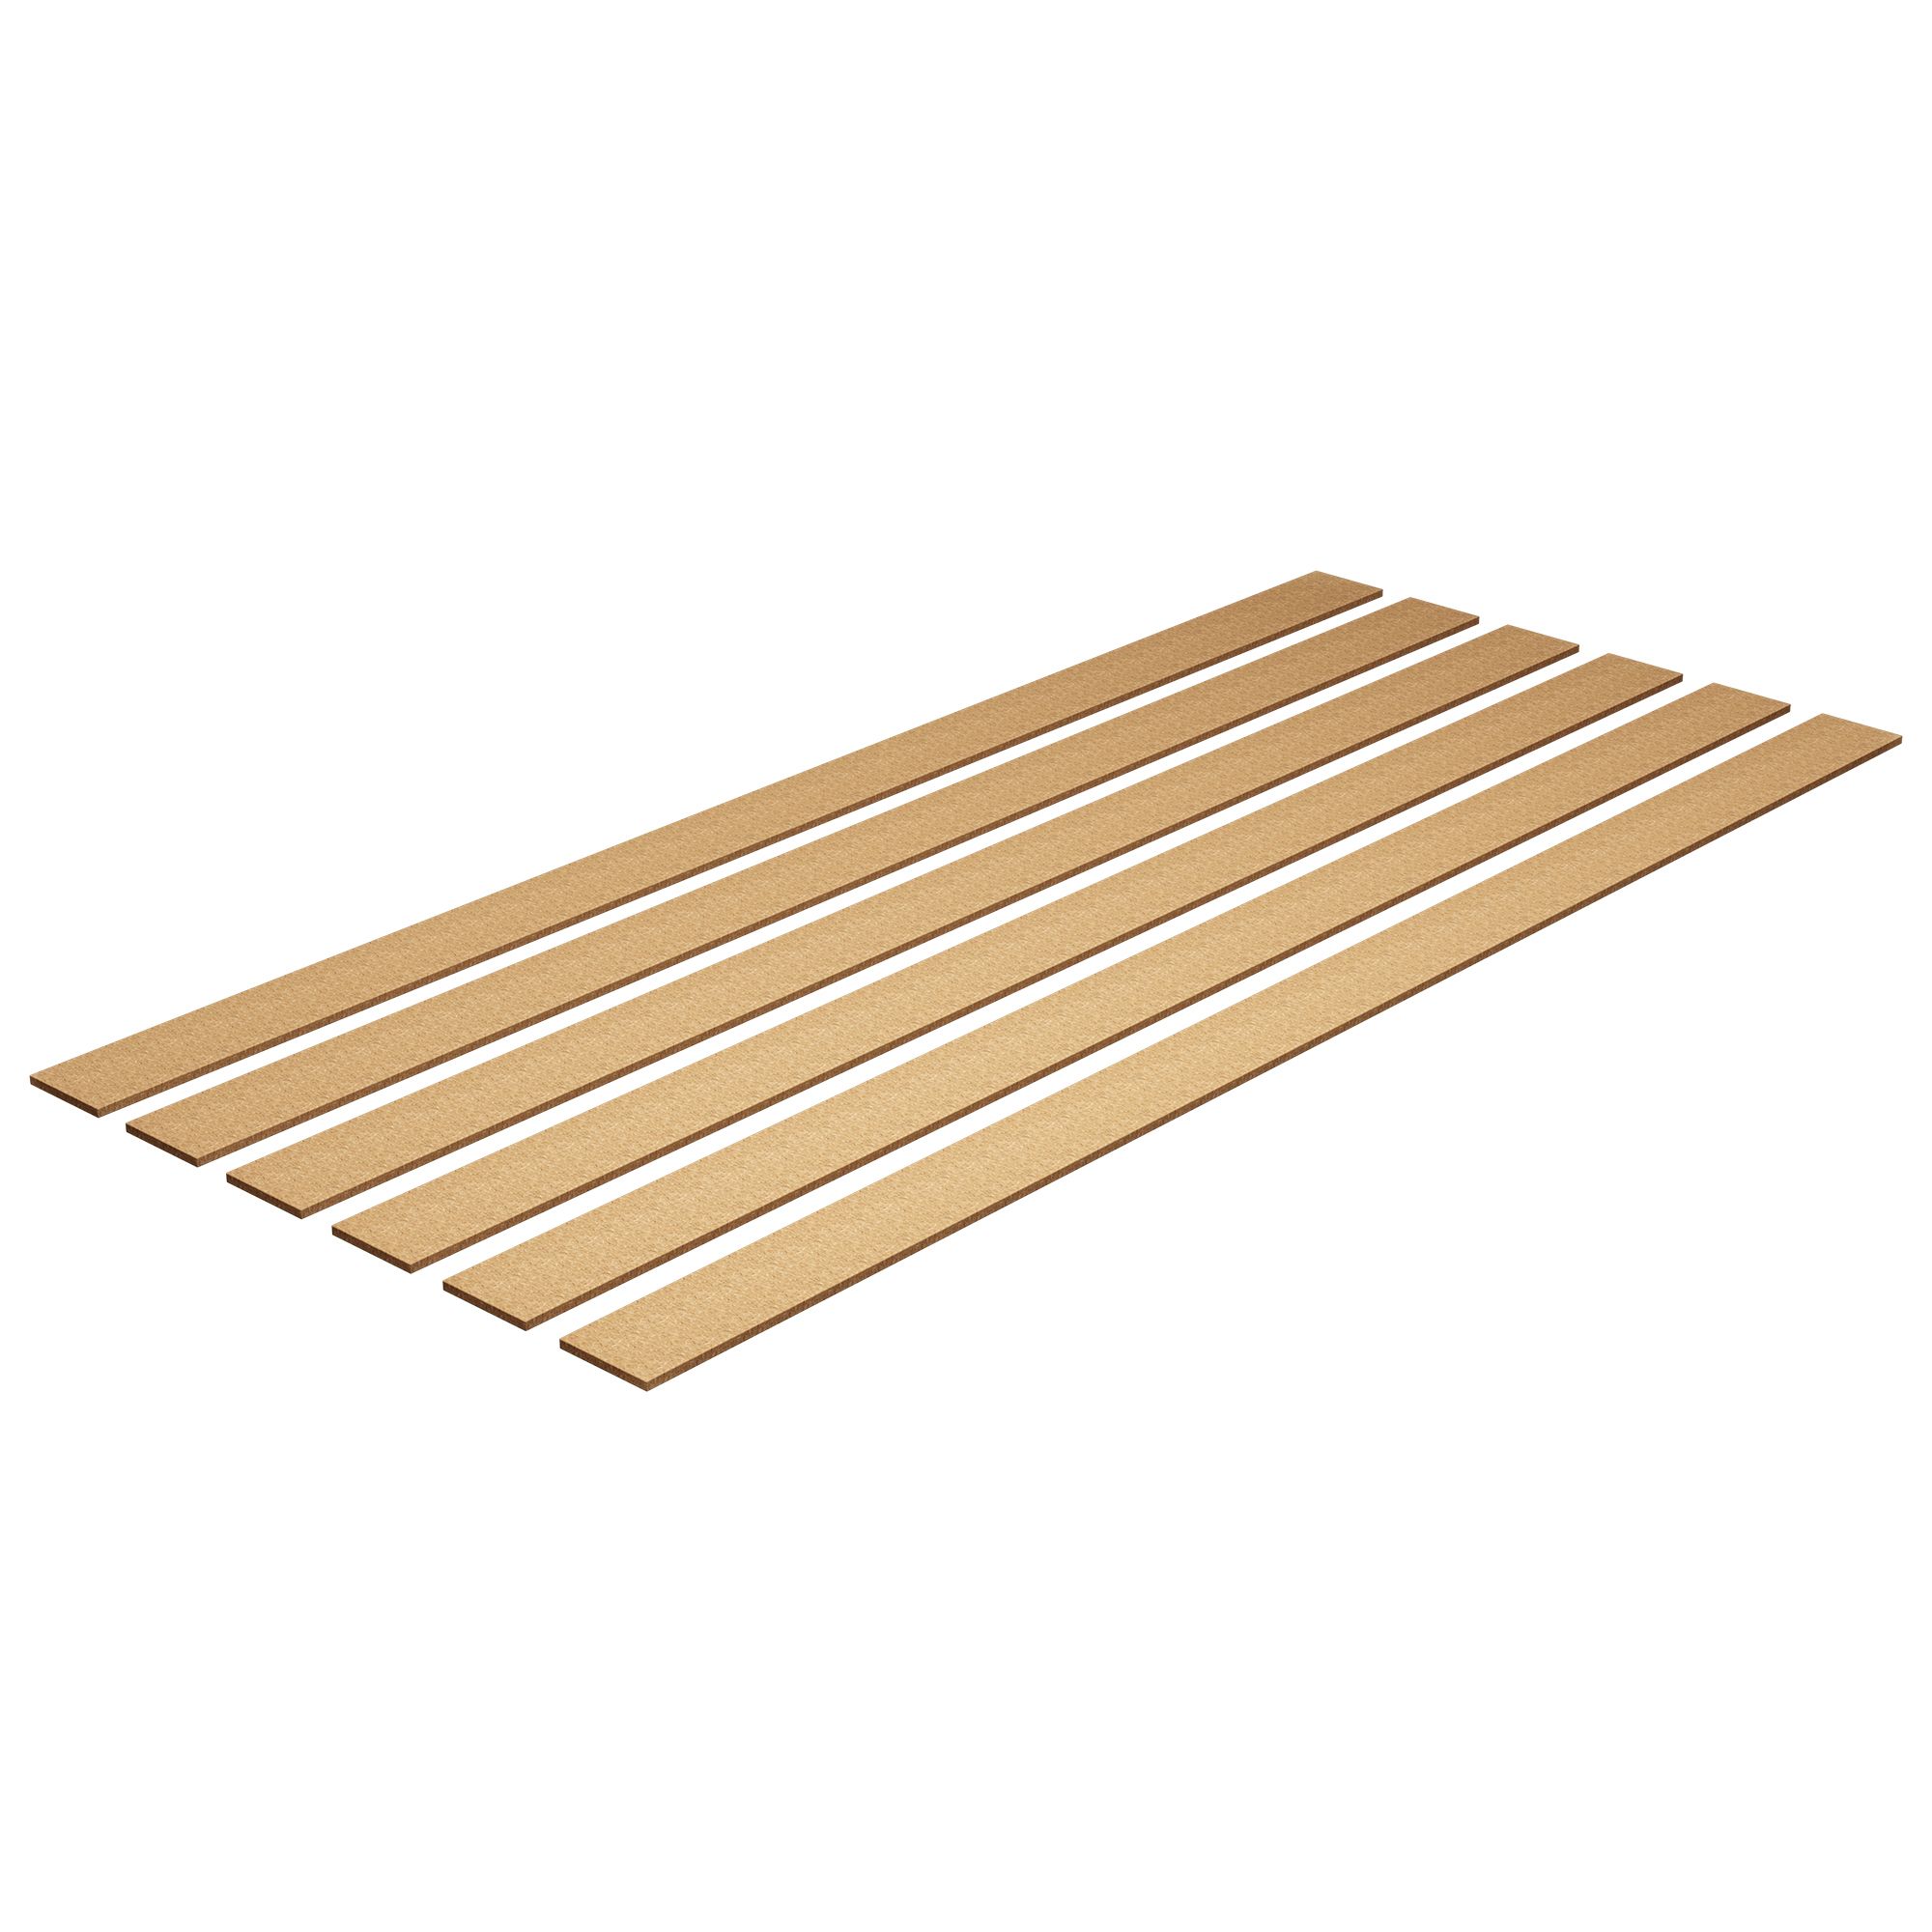 Cheshire Mouldings Medium-density fibreboard (MDF) Wall panelling kit (H)1200mm (W)97mm (T)9mm